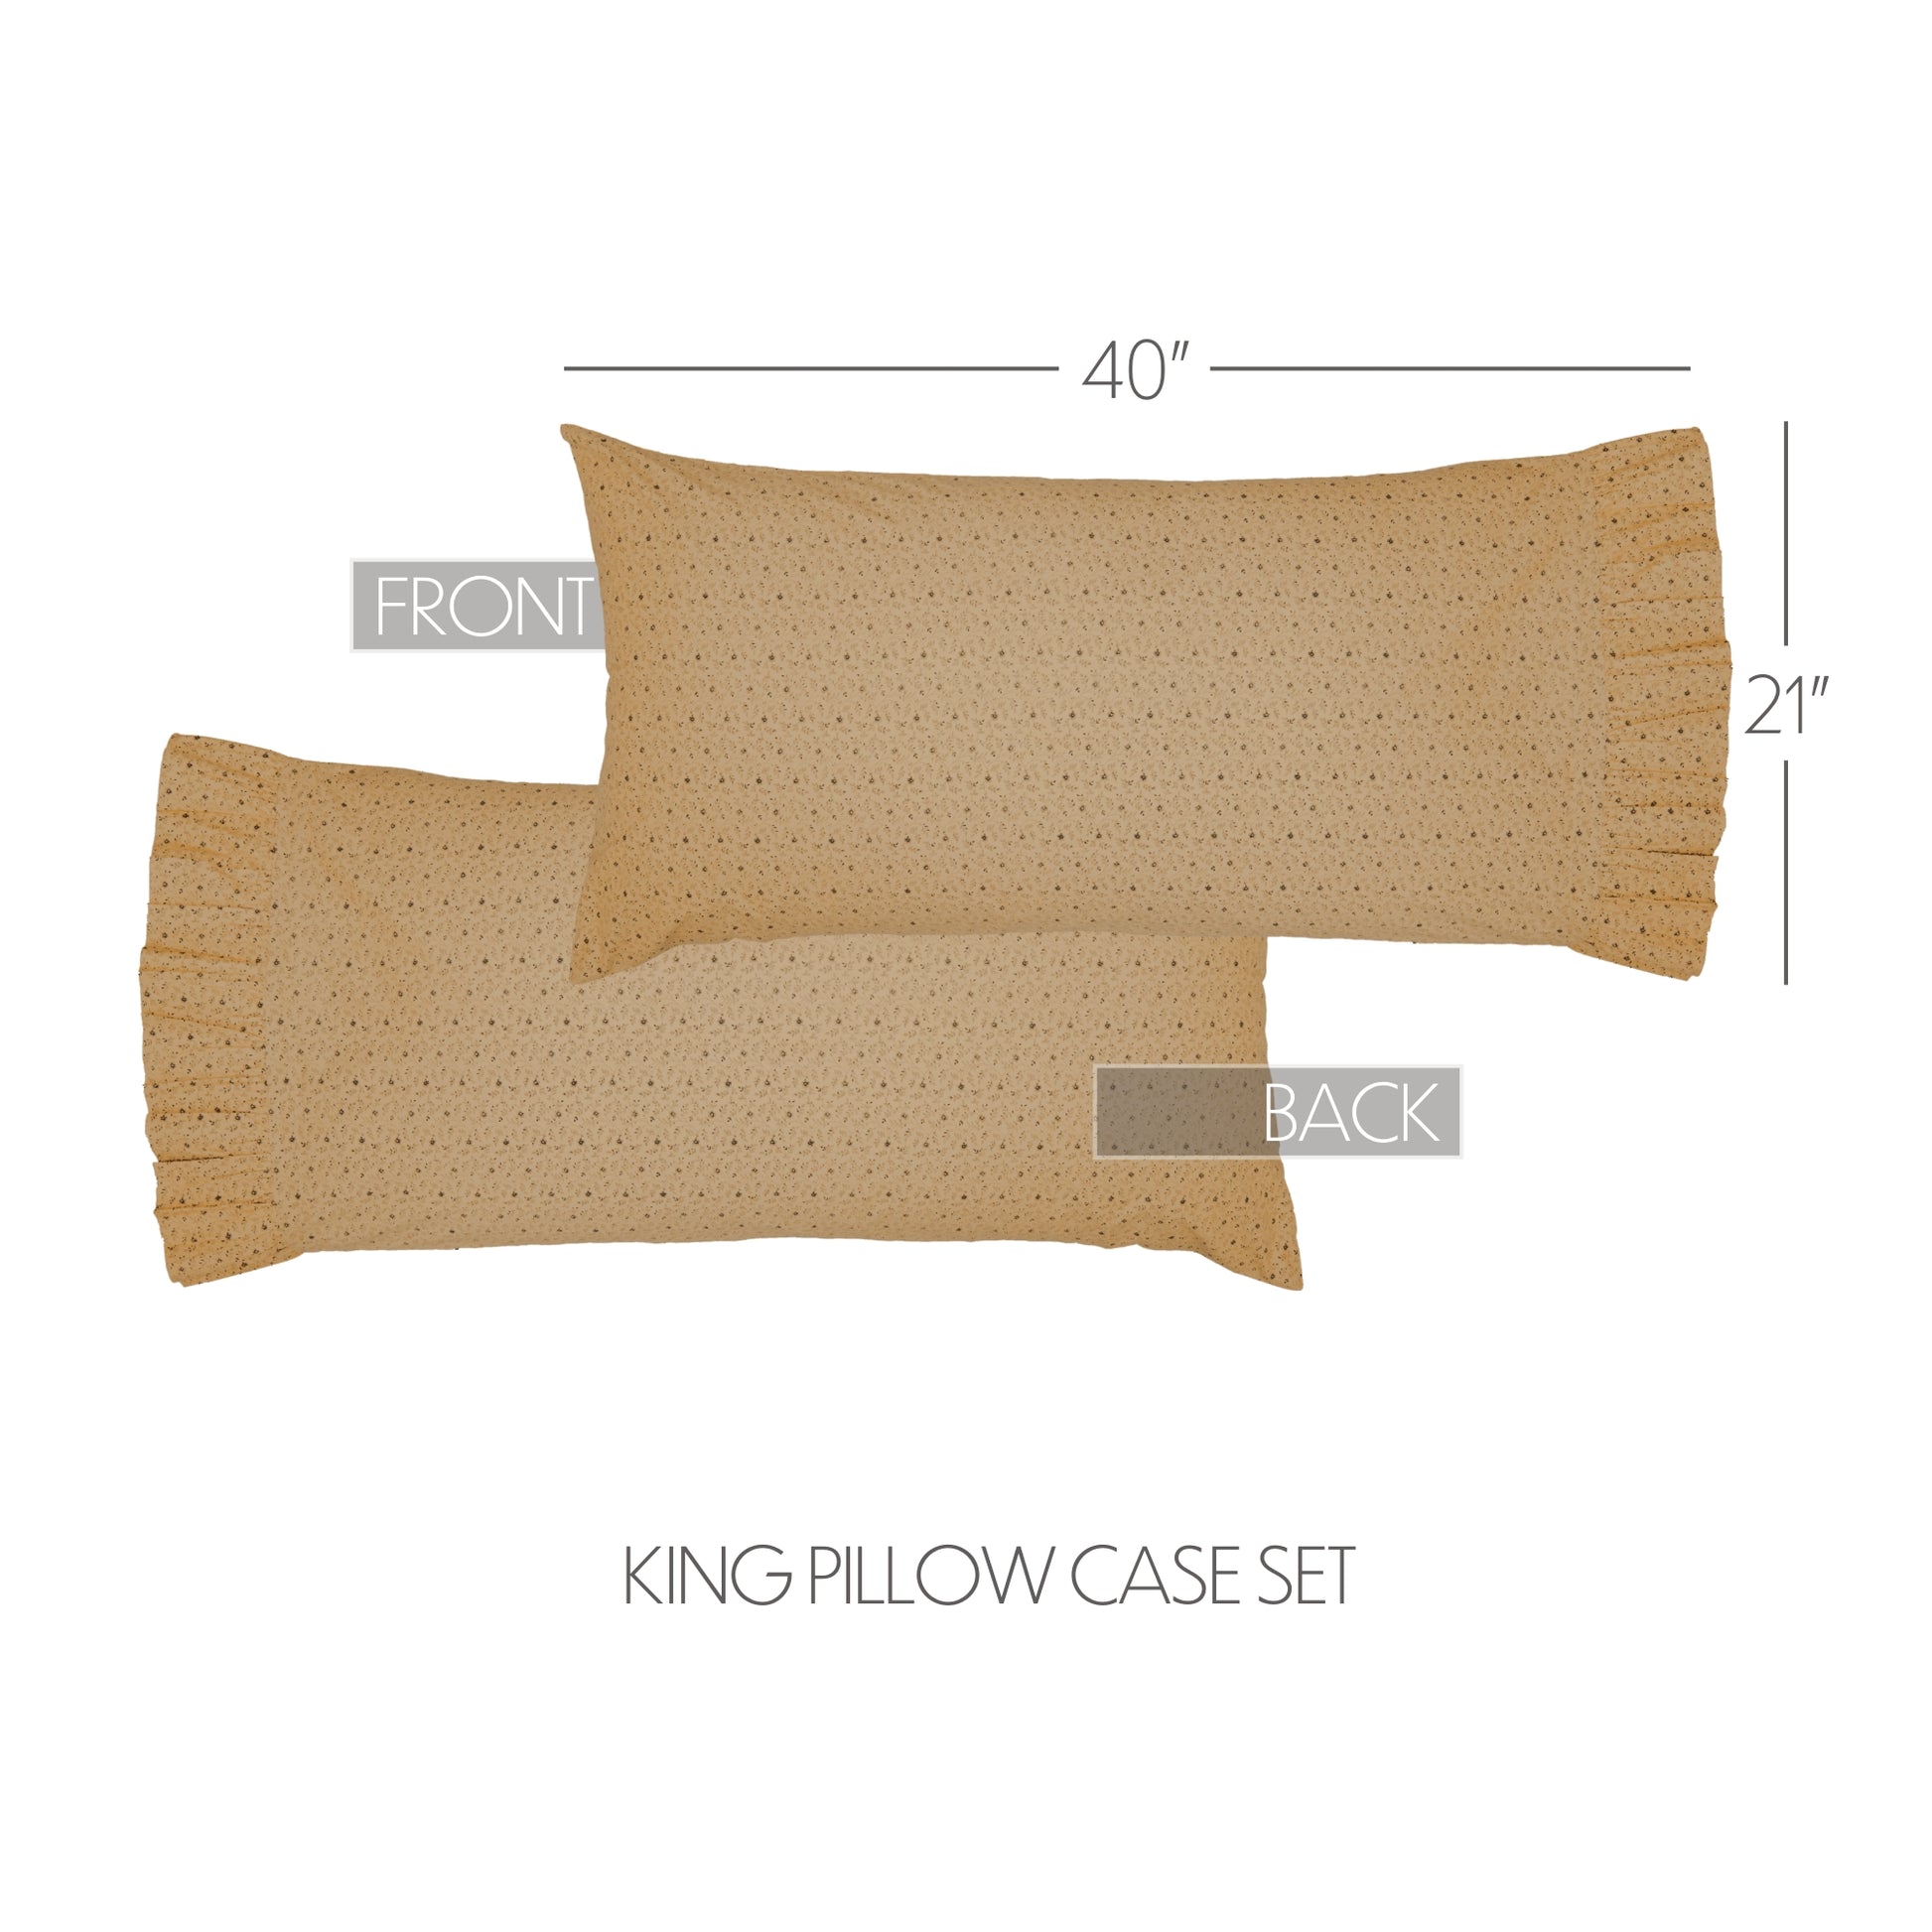 56733-Maisie-King-Pillow-Case-Set-of-2-21x40-image-1